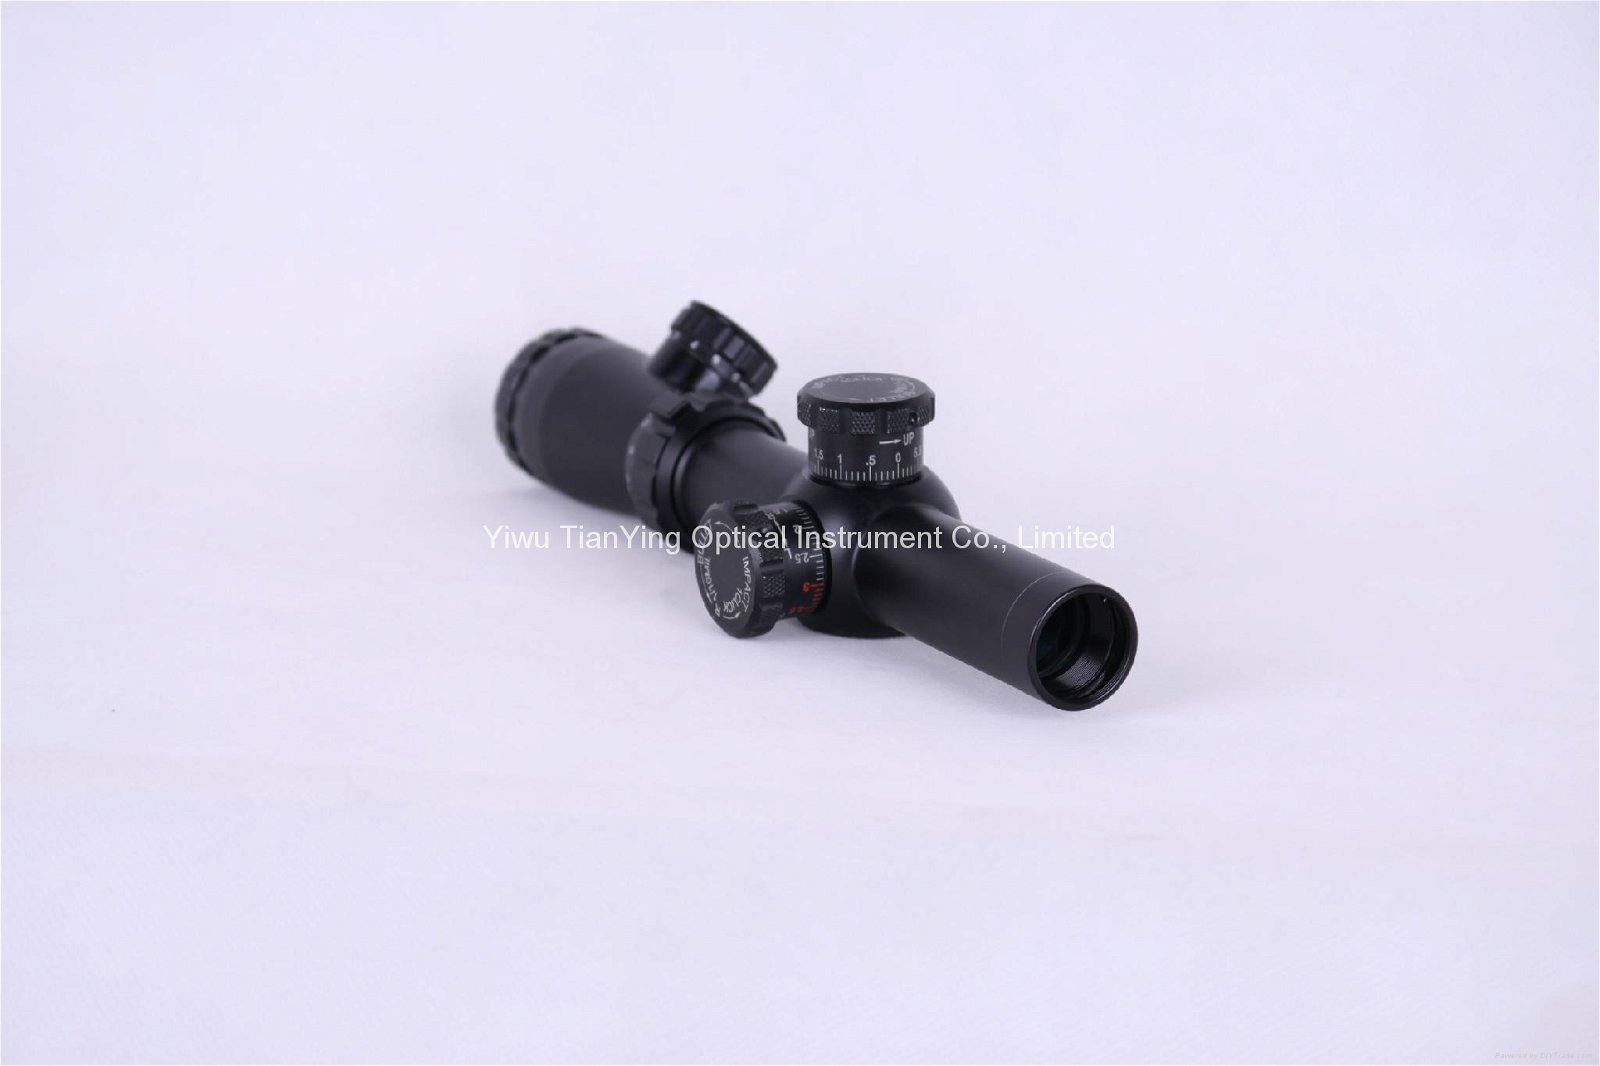 FT830 Fiber Optics Riflescope / Rifle Scope .223 Ballistic Reticle - M4/M16/AR15 -2